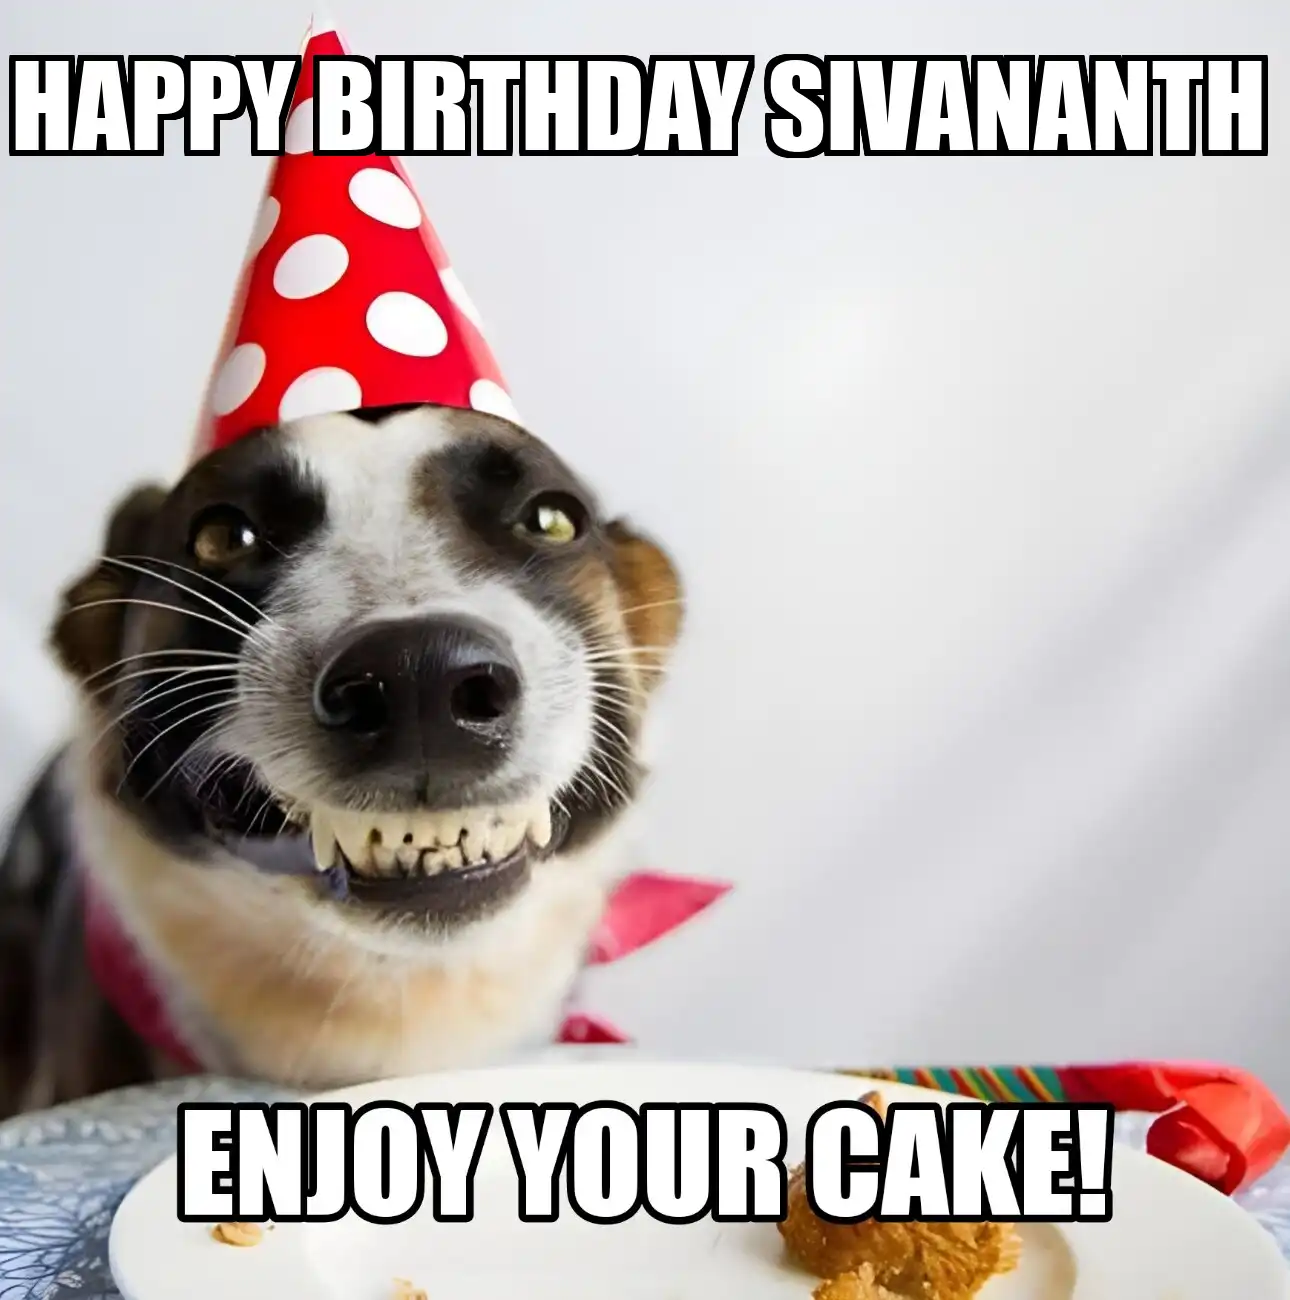 Happy Birthday Sivananth Enjoy Your Cake Dog Meme